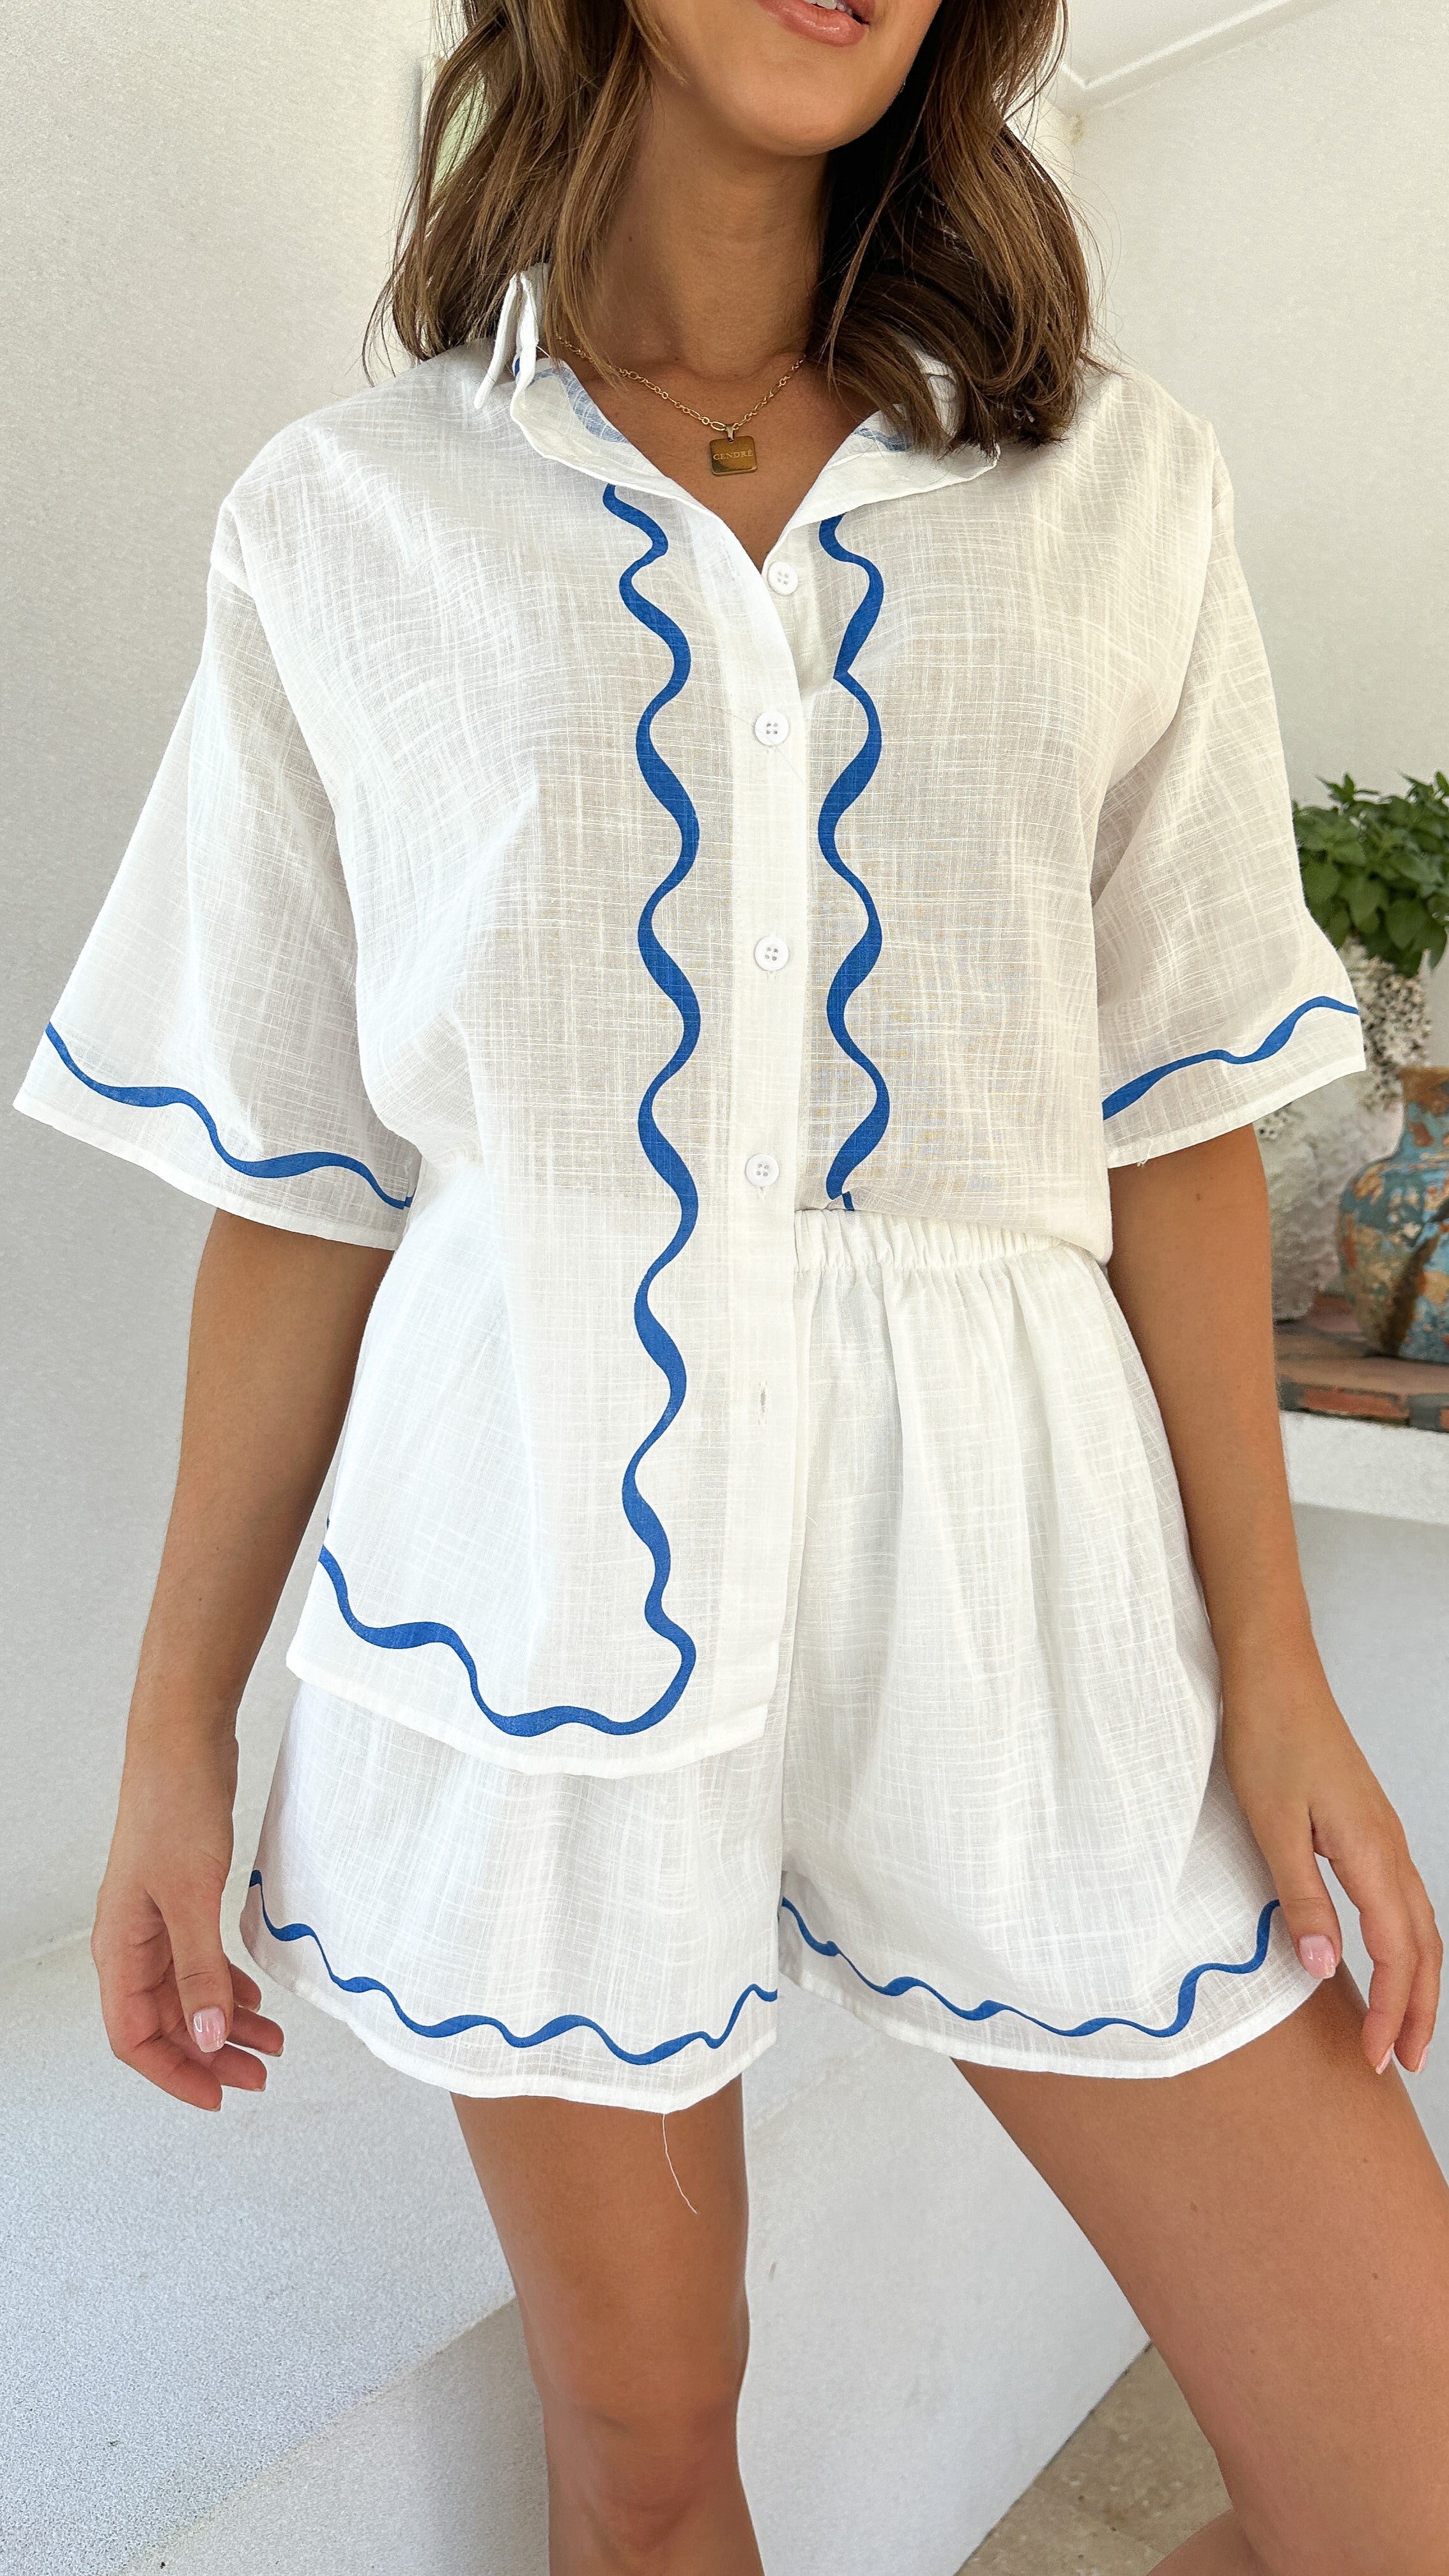 Liana Button Up Shirt and Shorts Set - White/Blue